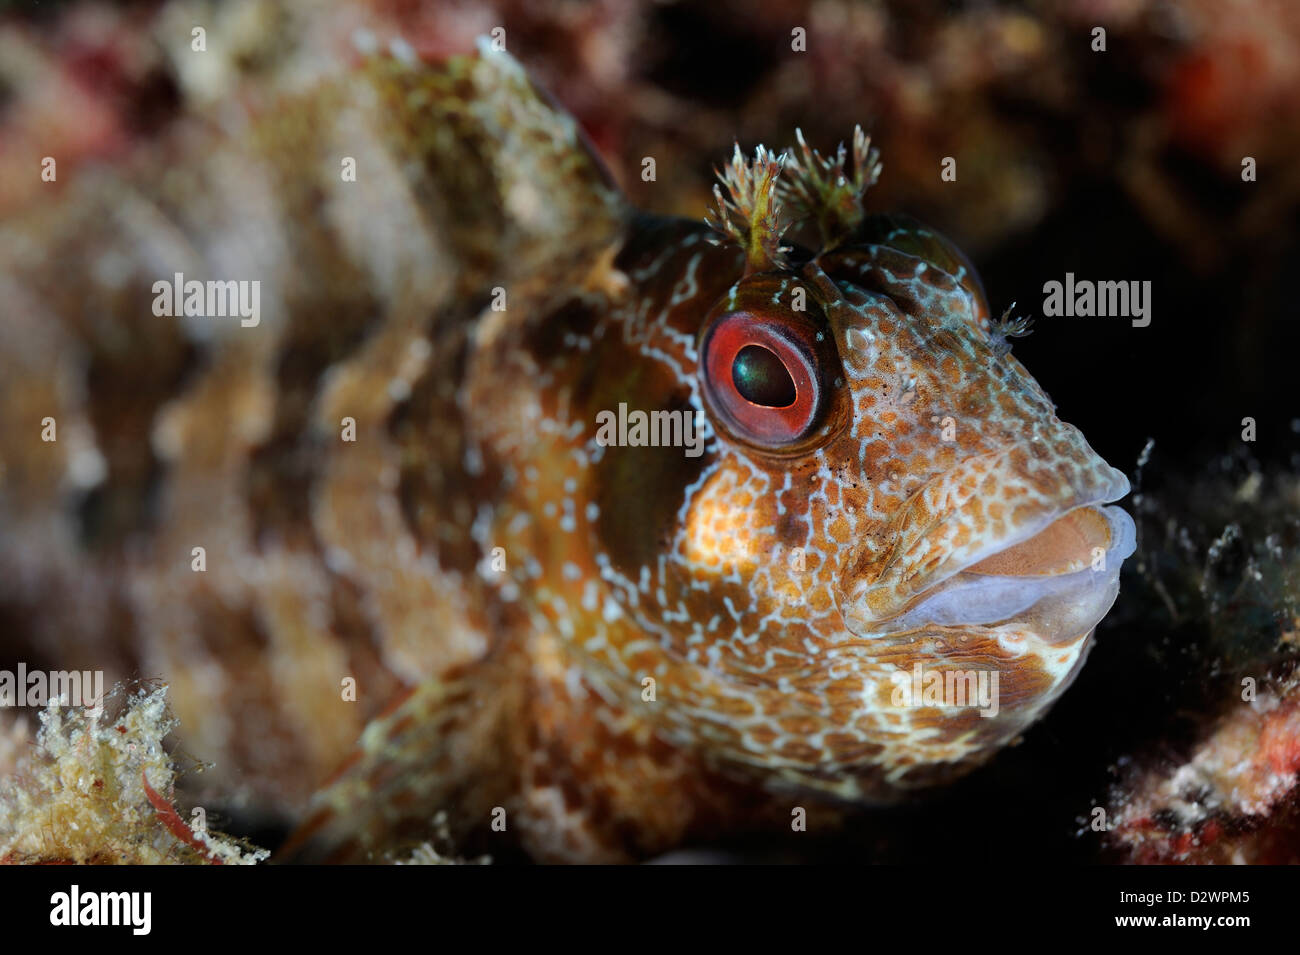 fish underwater view of Blenny, Parablennius incognitus, Mediterranean Sea, France Stock Photo